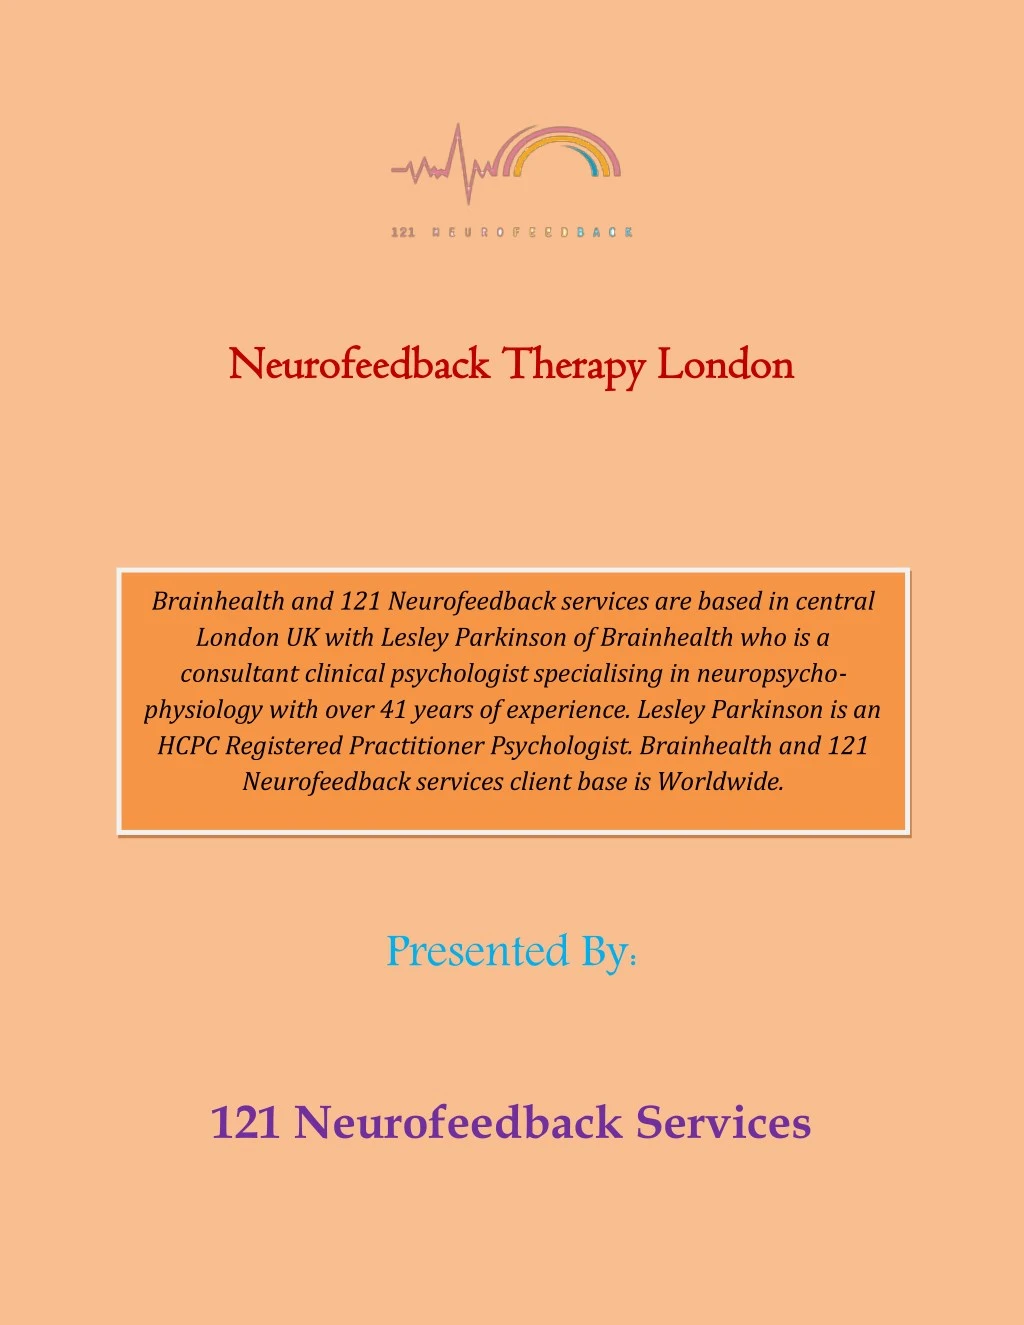 neurofeedback therapy london neurofeedback